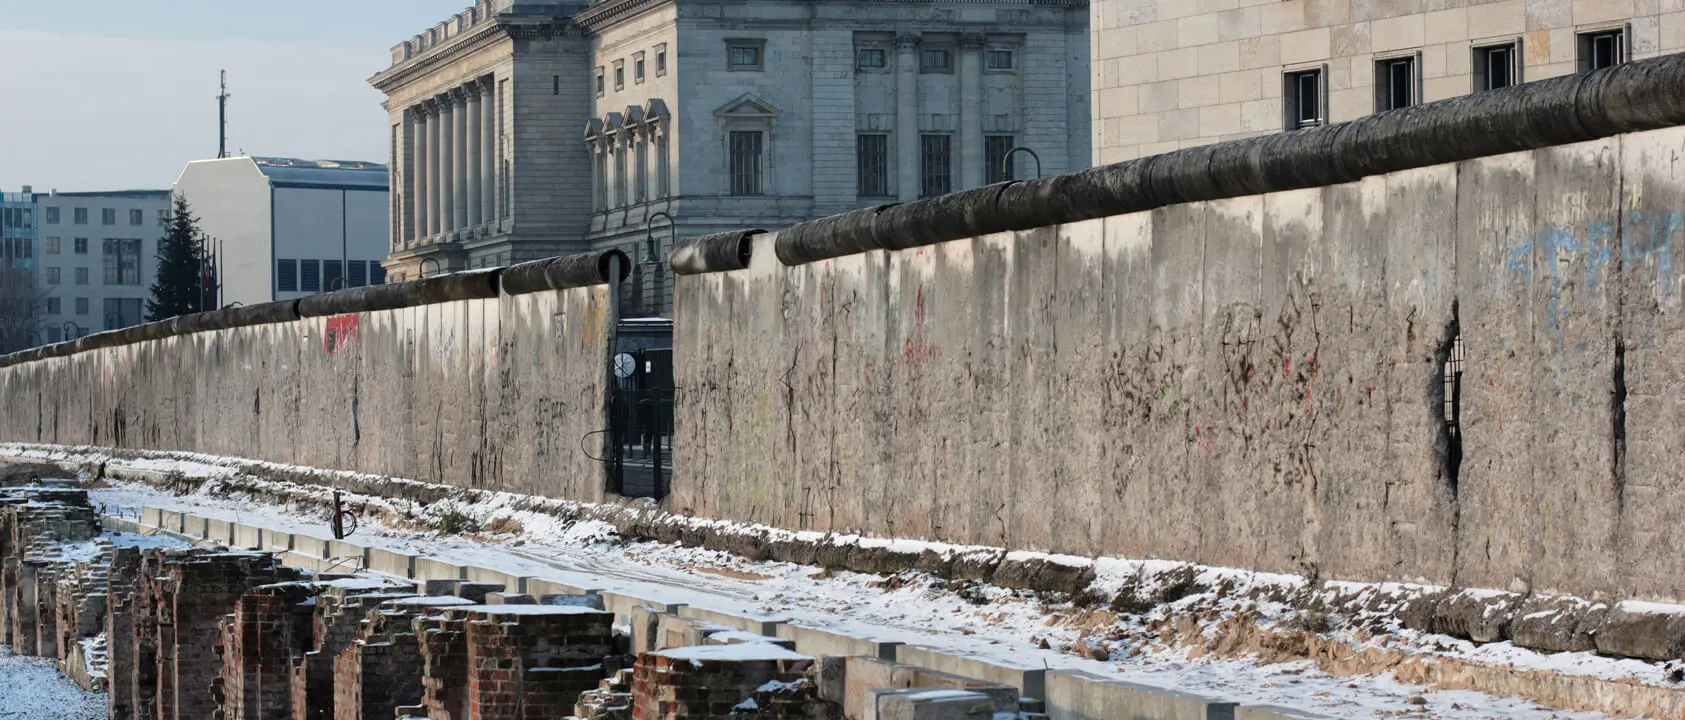 Berlin Berlin Wall History